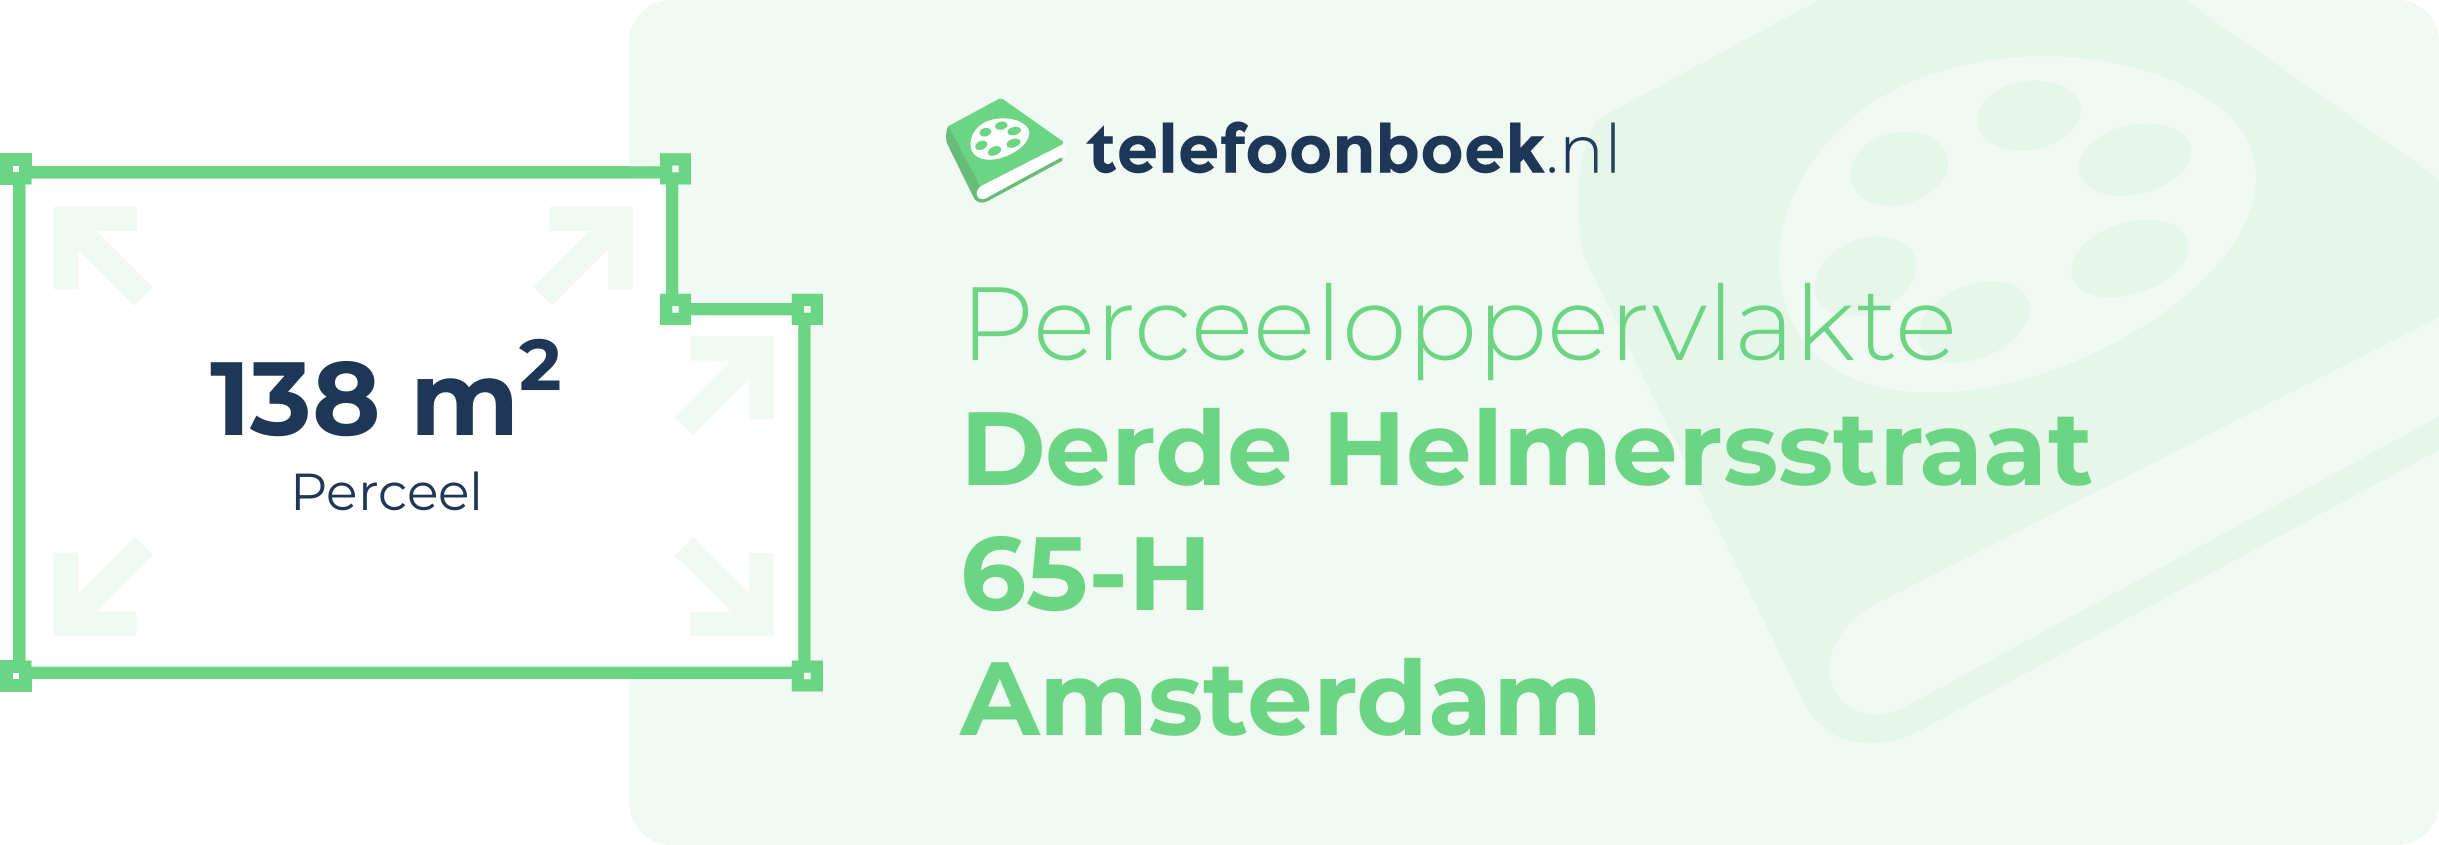 Perceeloppervlakte Derde Helmersstraat 65-H Amsterdam